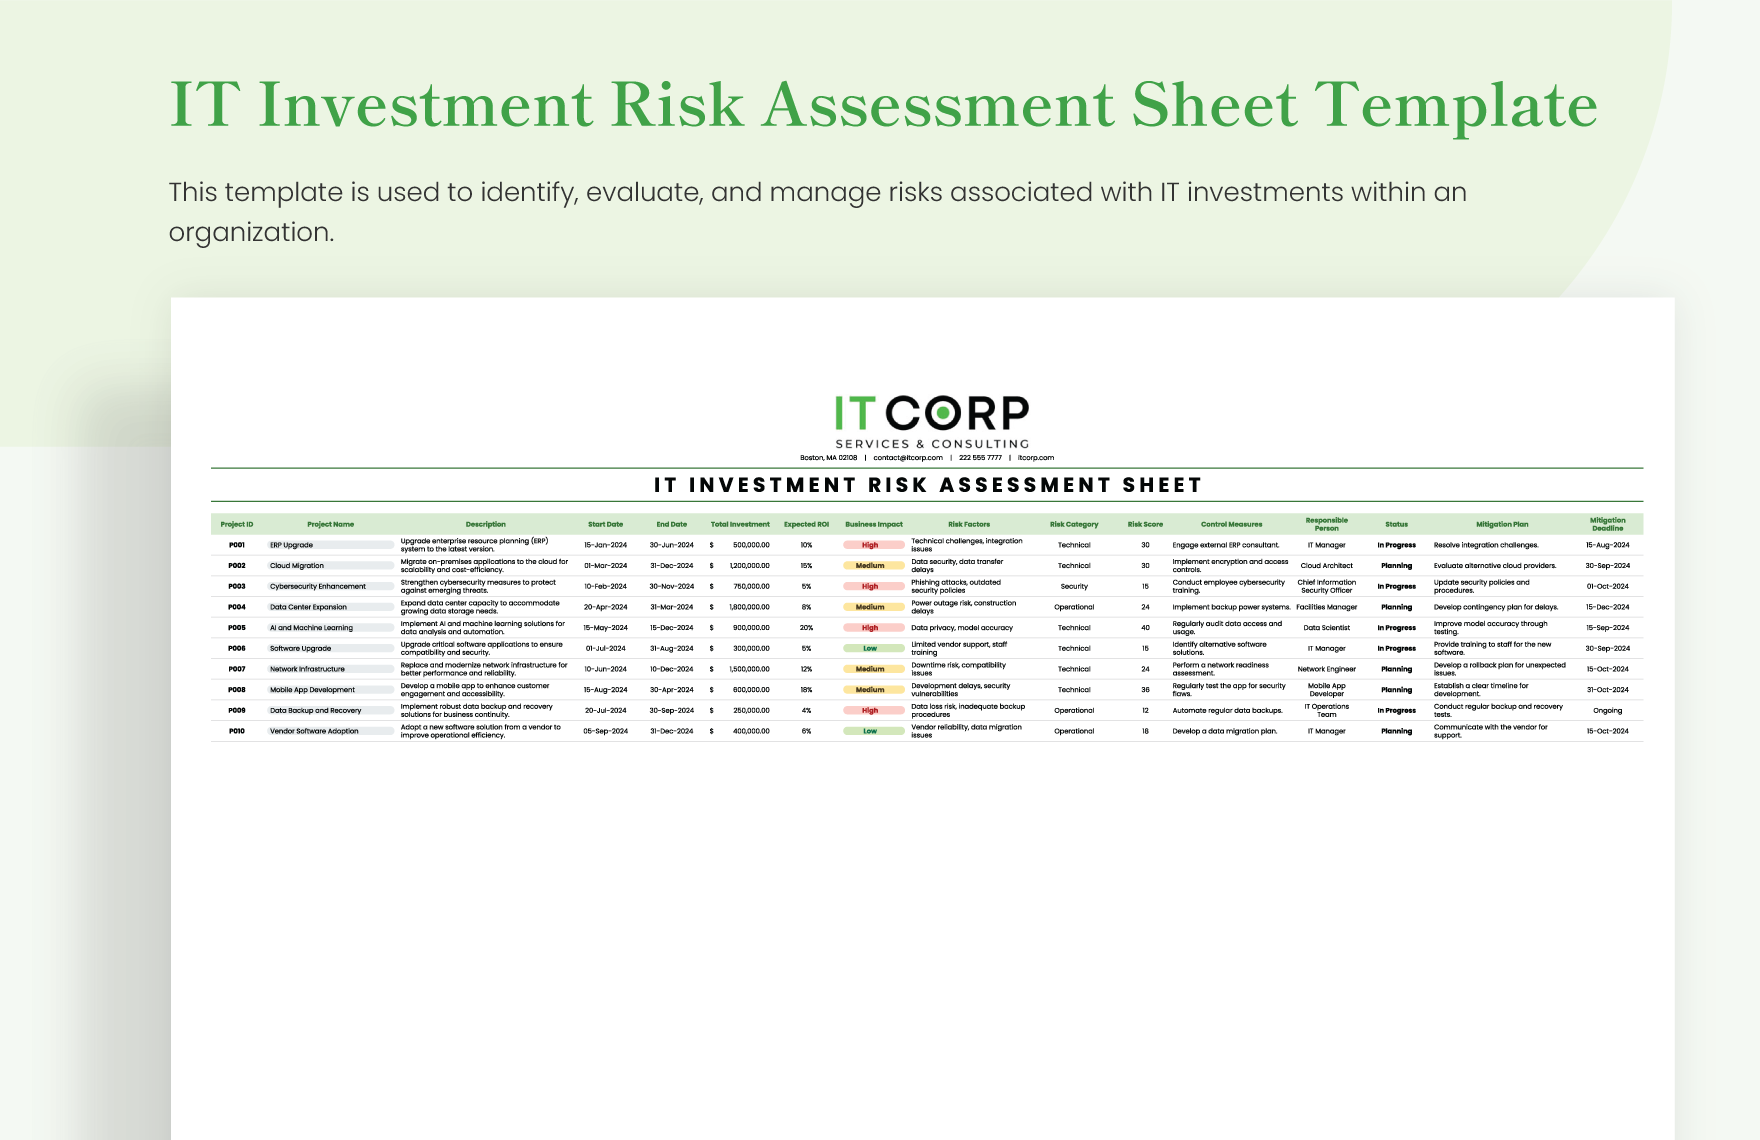 IT Investment Risk Assessment Sheet Template